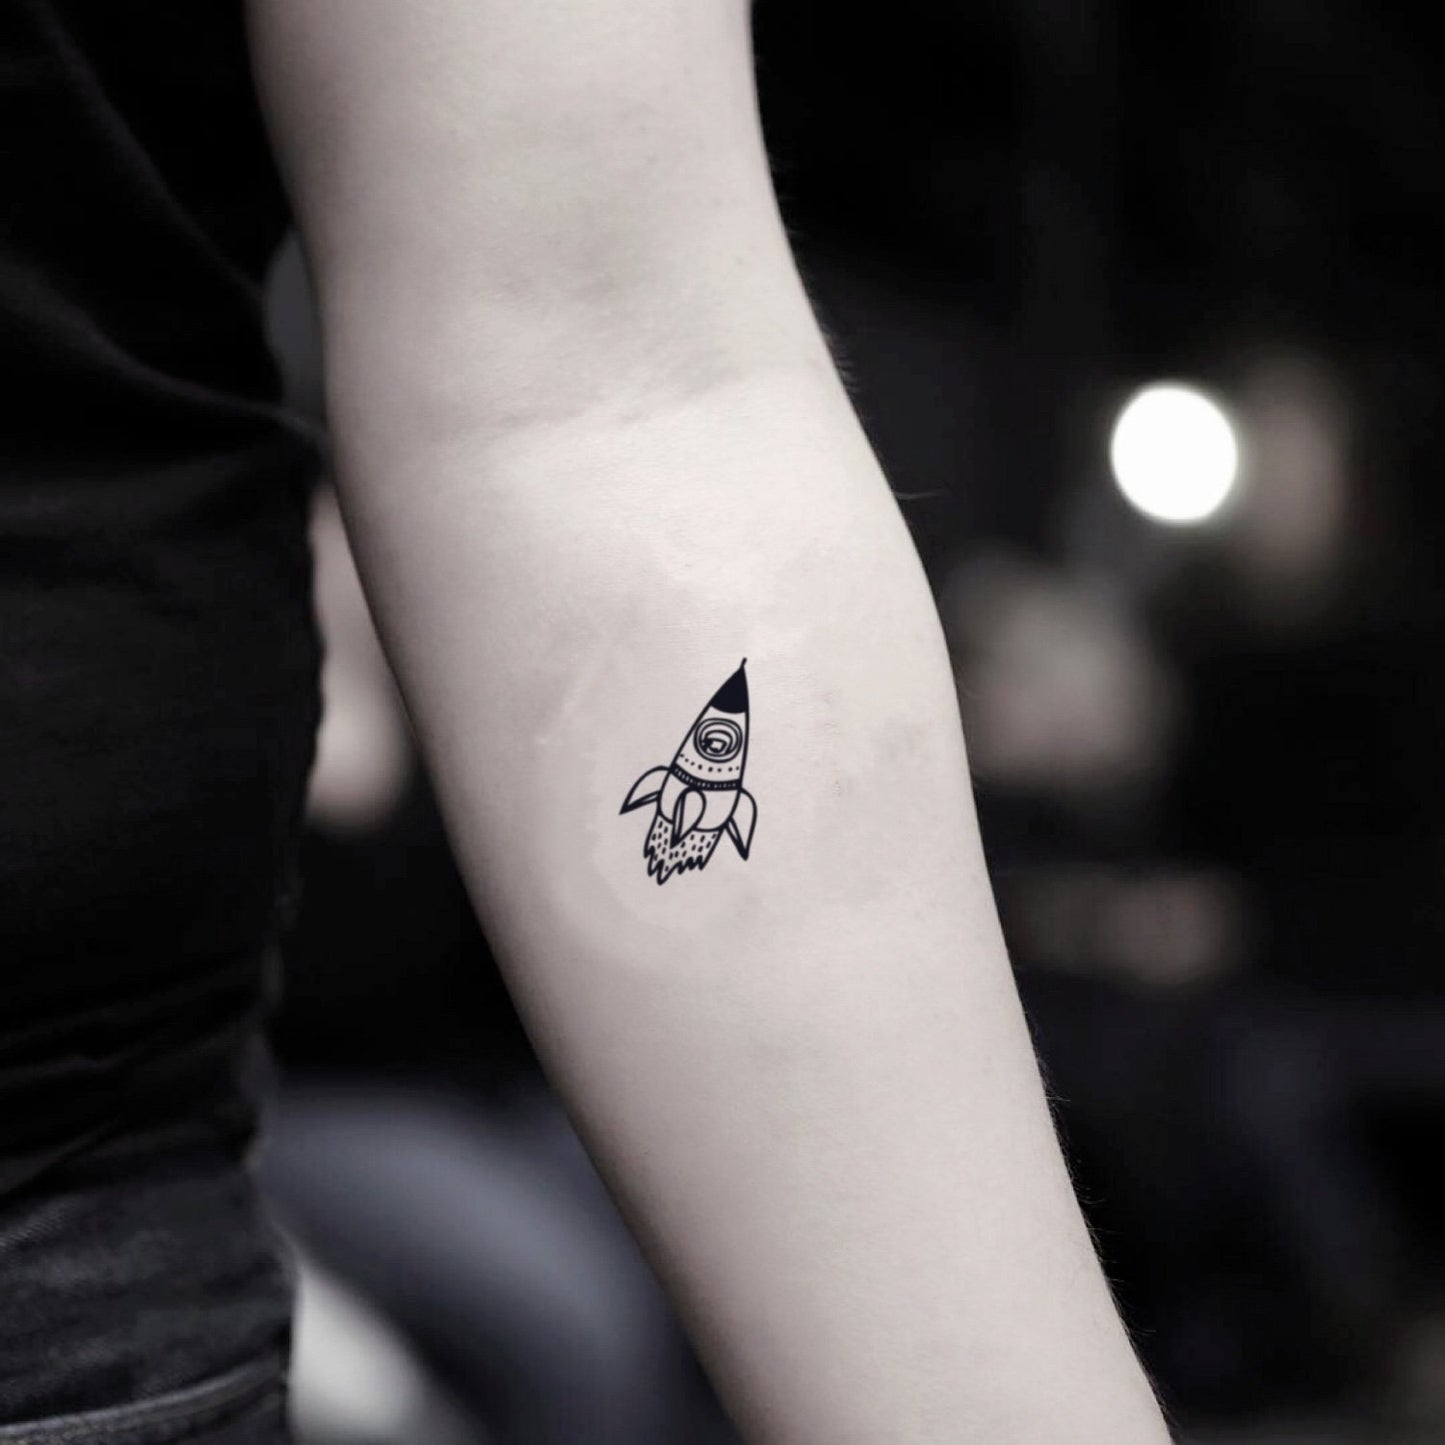 fake tiny rocket ship minimalist temporary tattoo sticker design idea on inner arm